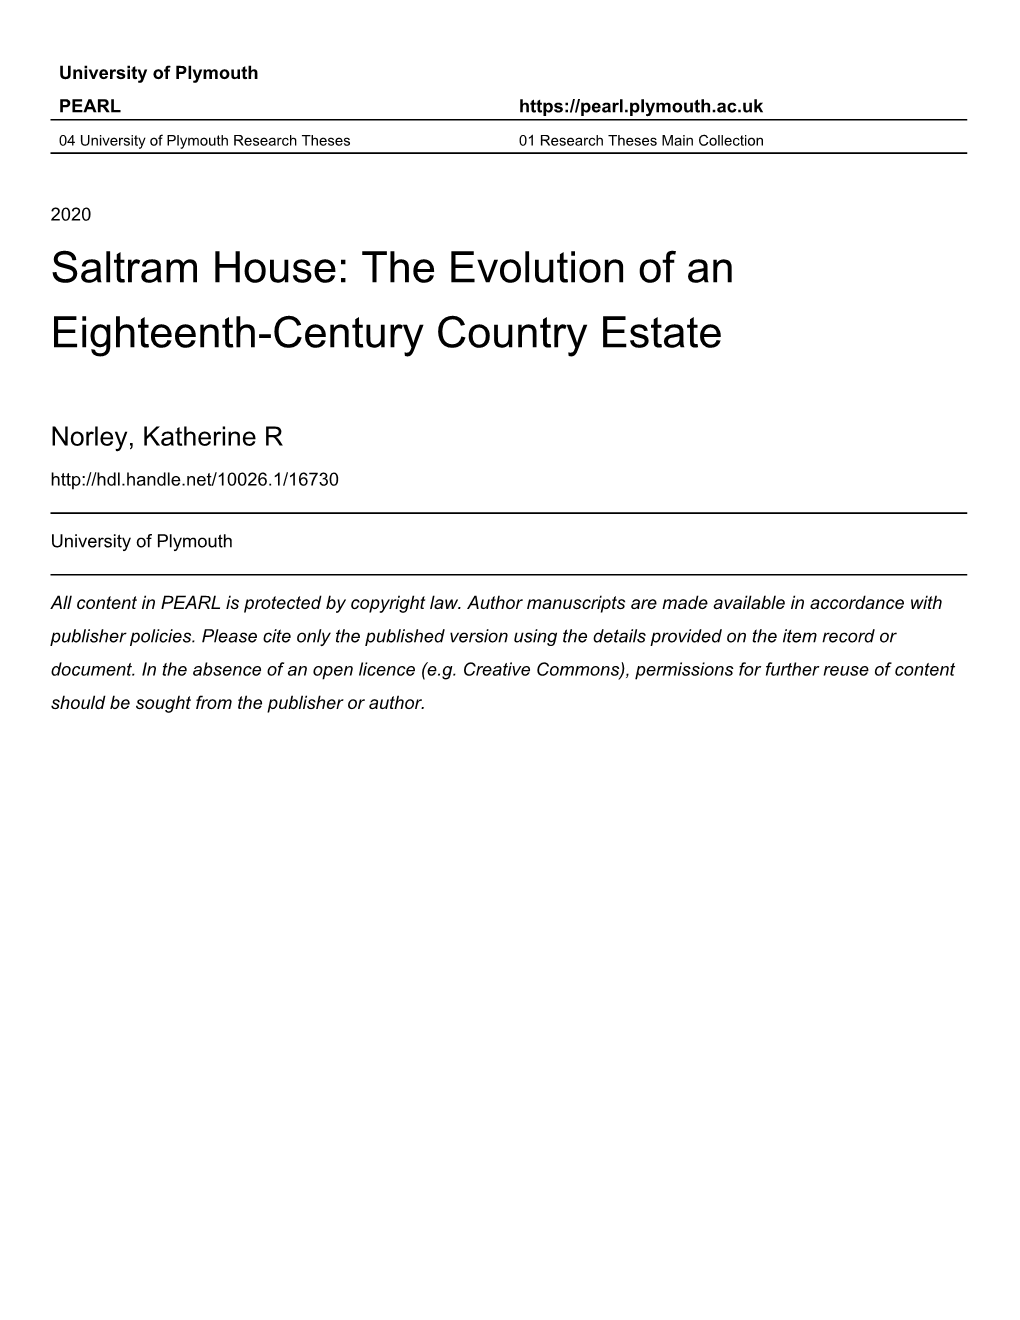 Saltram House: the Evolution of an Eighteenth-Century Country Estate